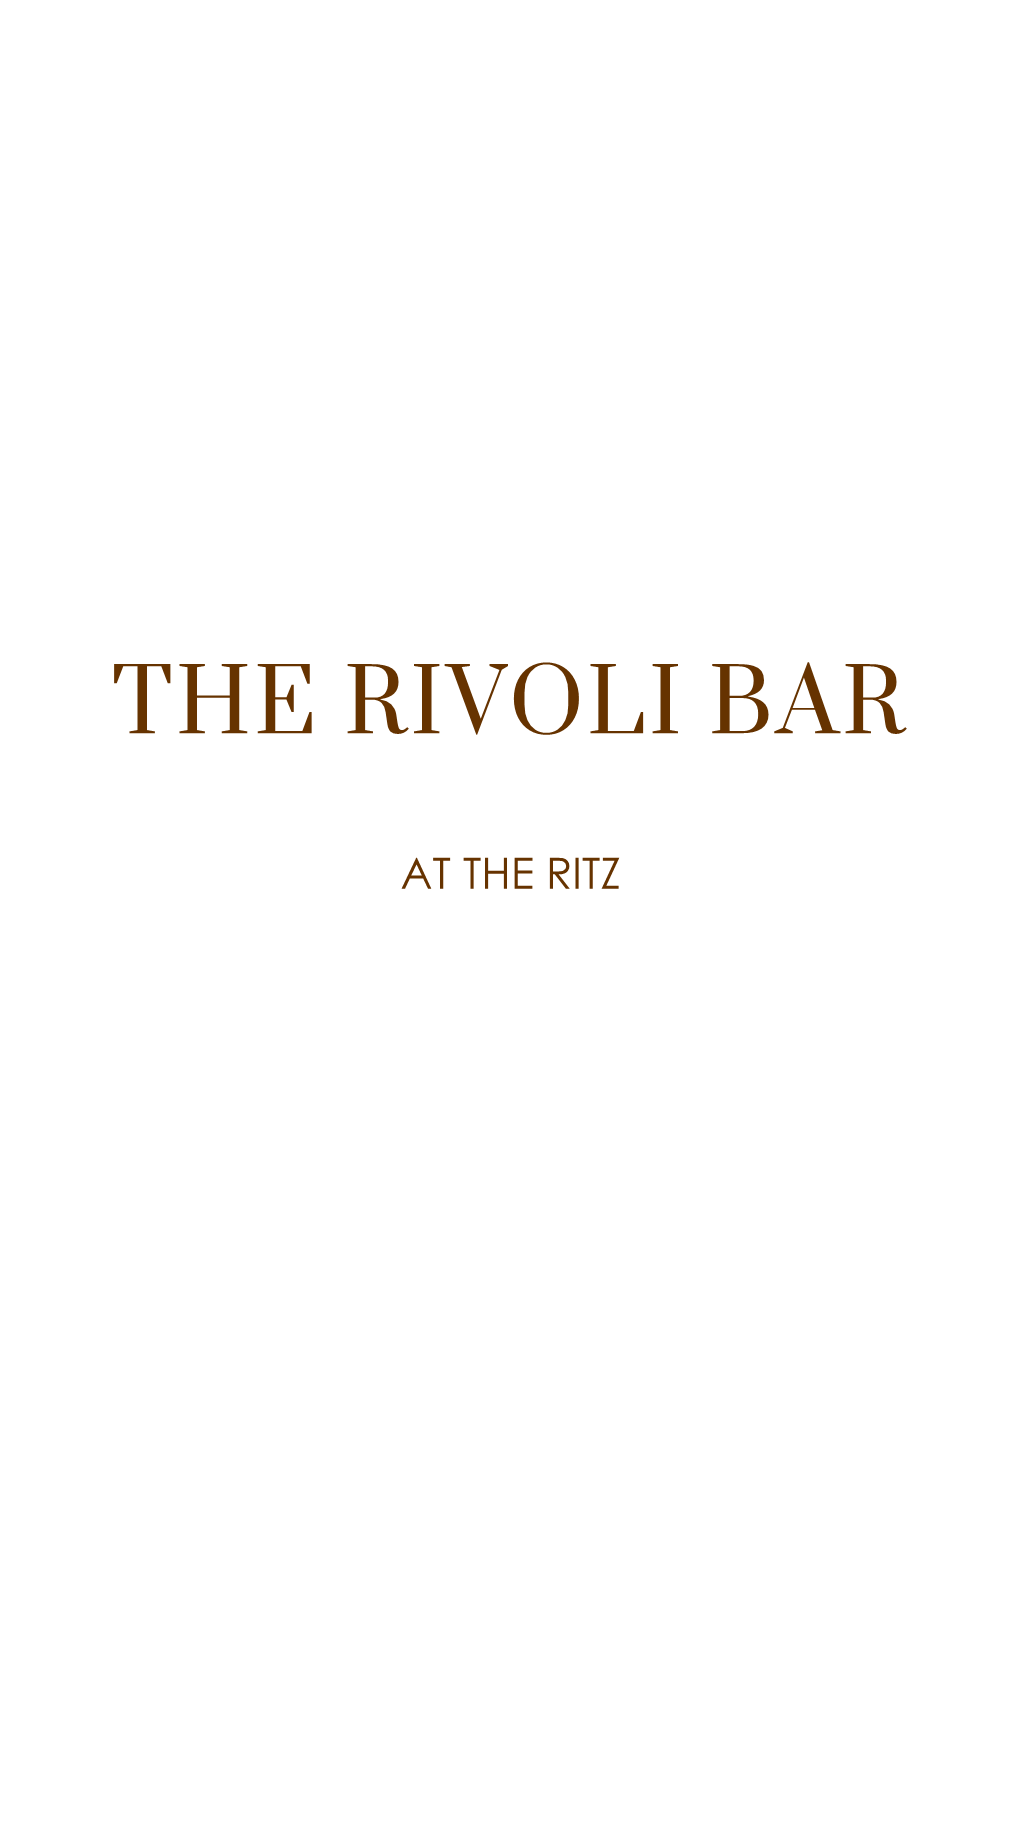 The Rivoli Bar